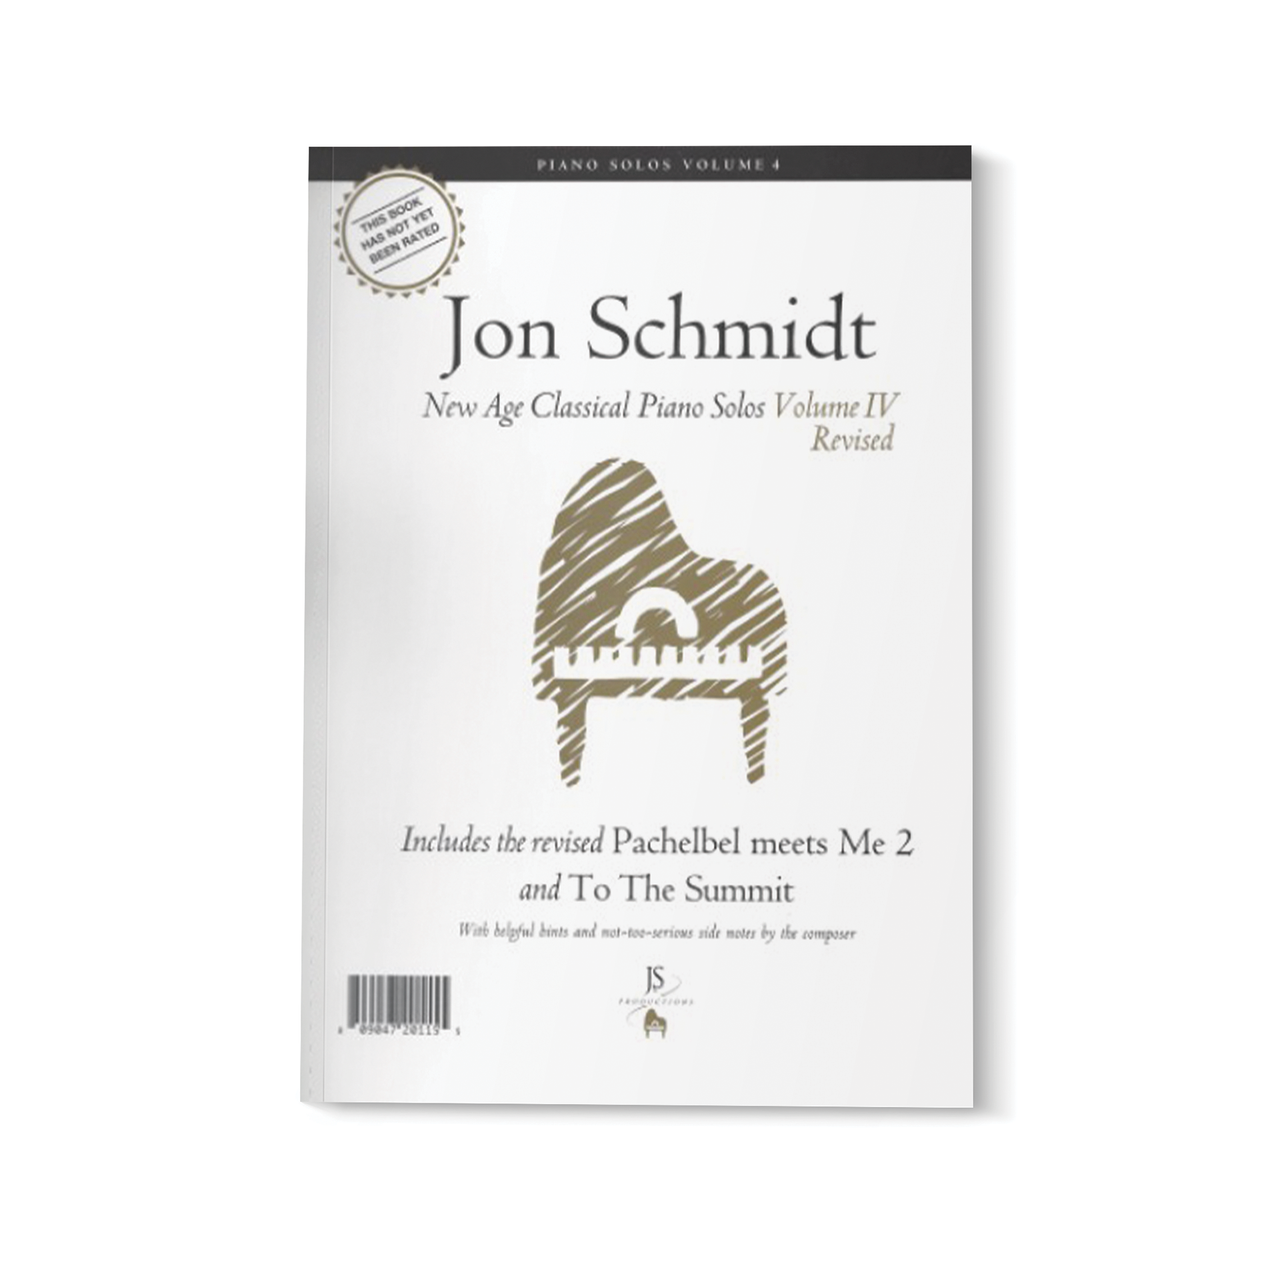 Jon Schmidt VOL 1-4 Bundle